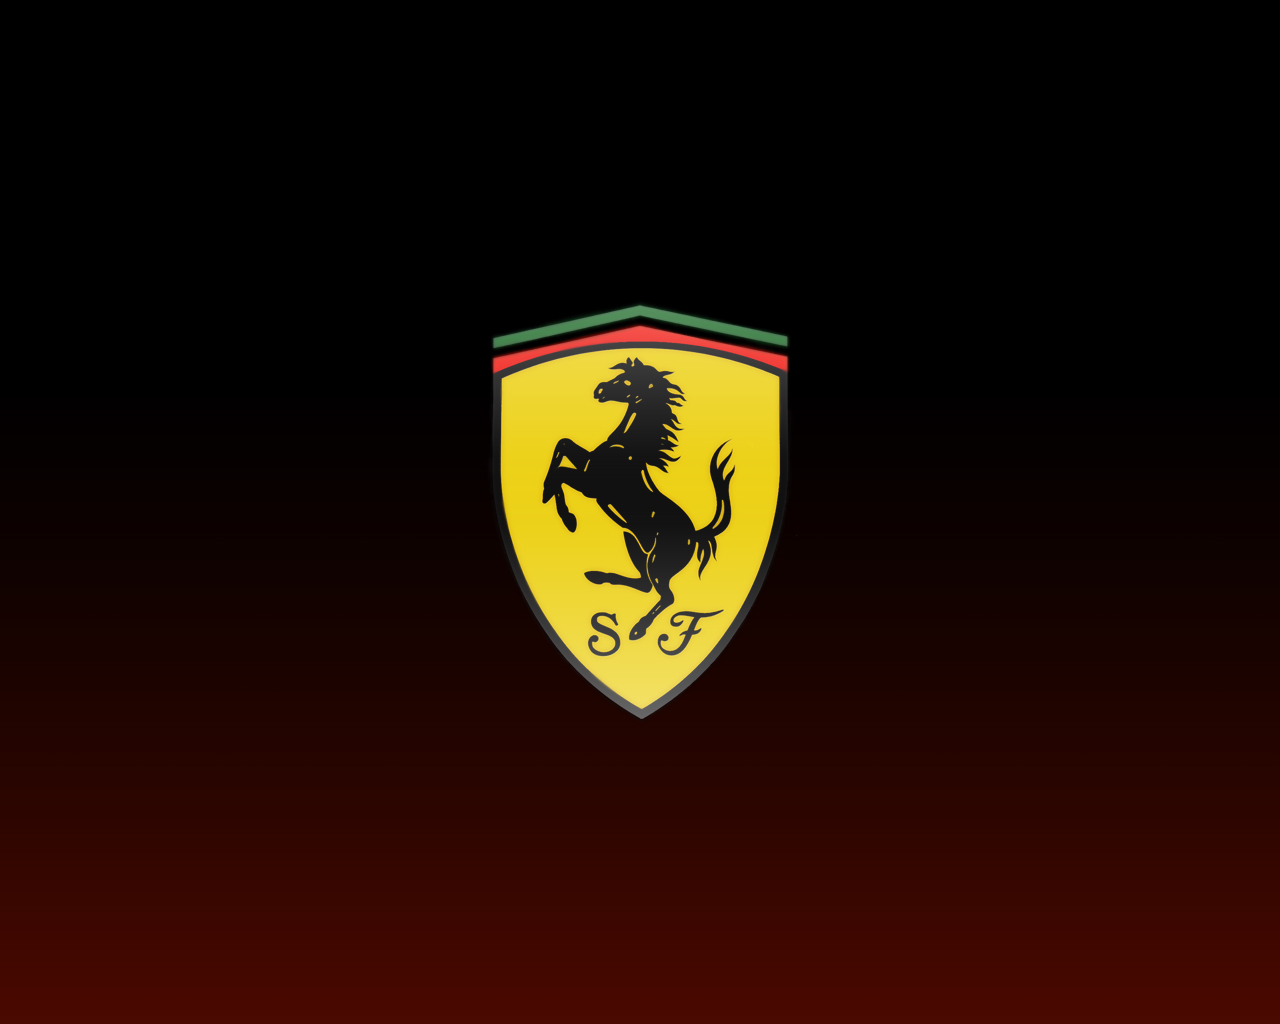 Characteristics of the Ferrari logo